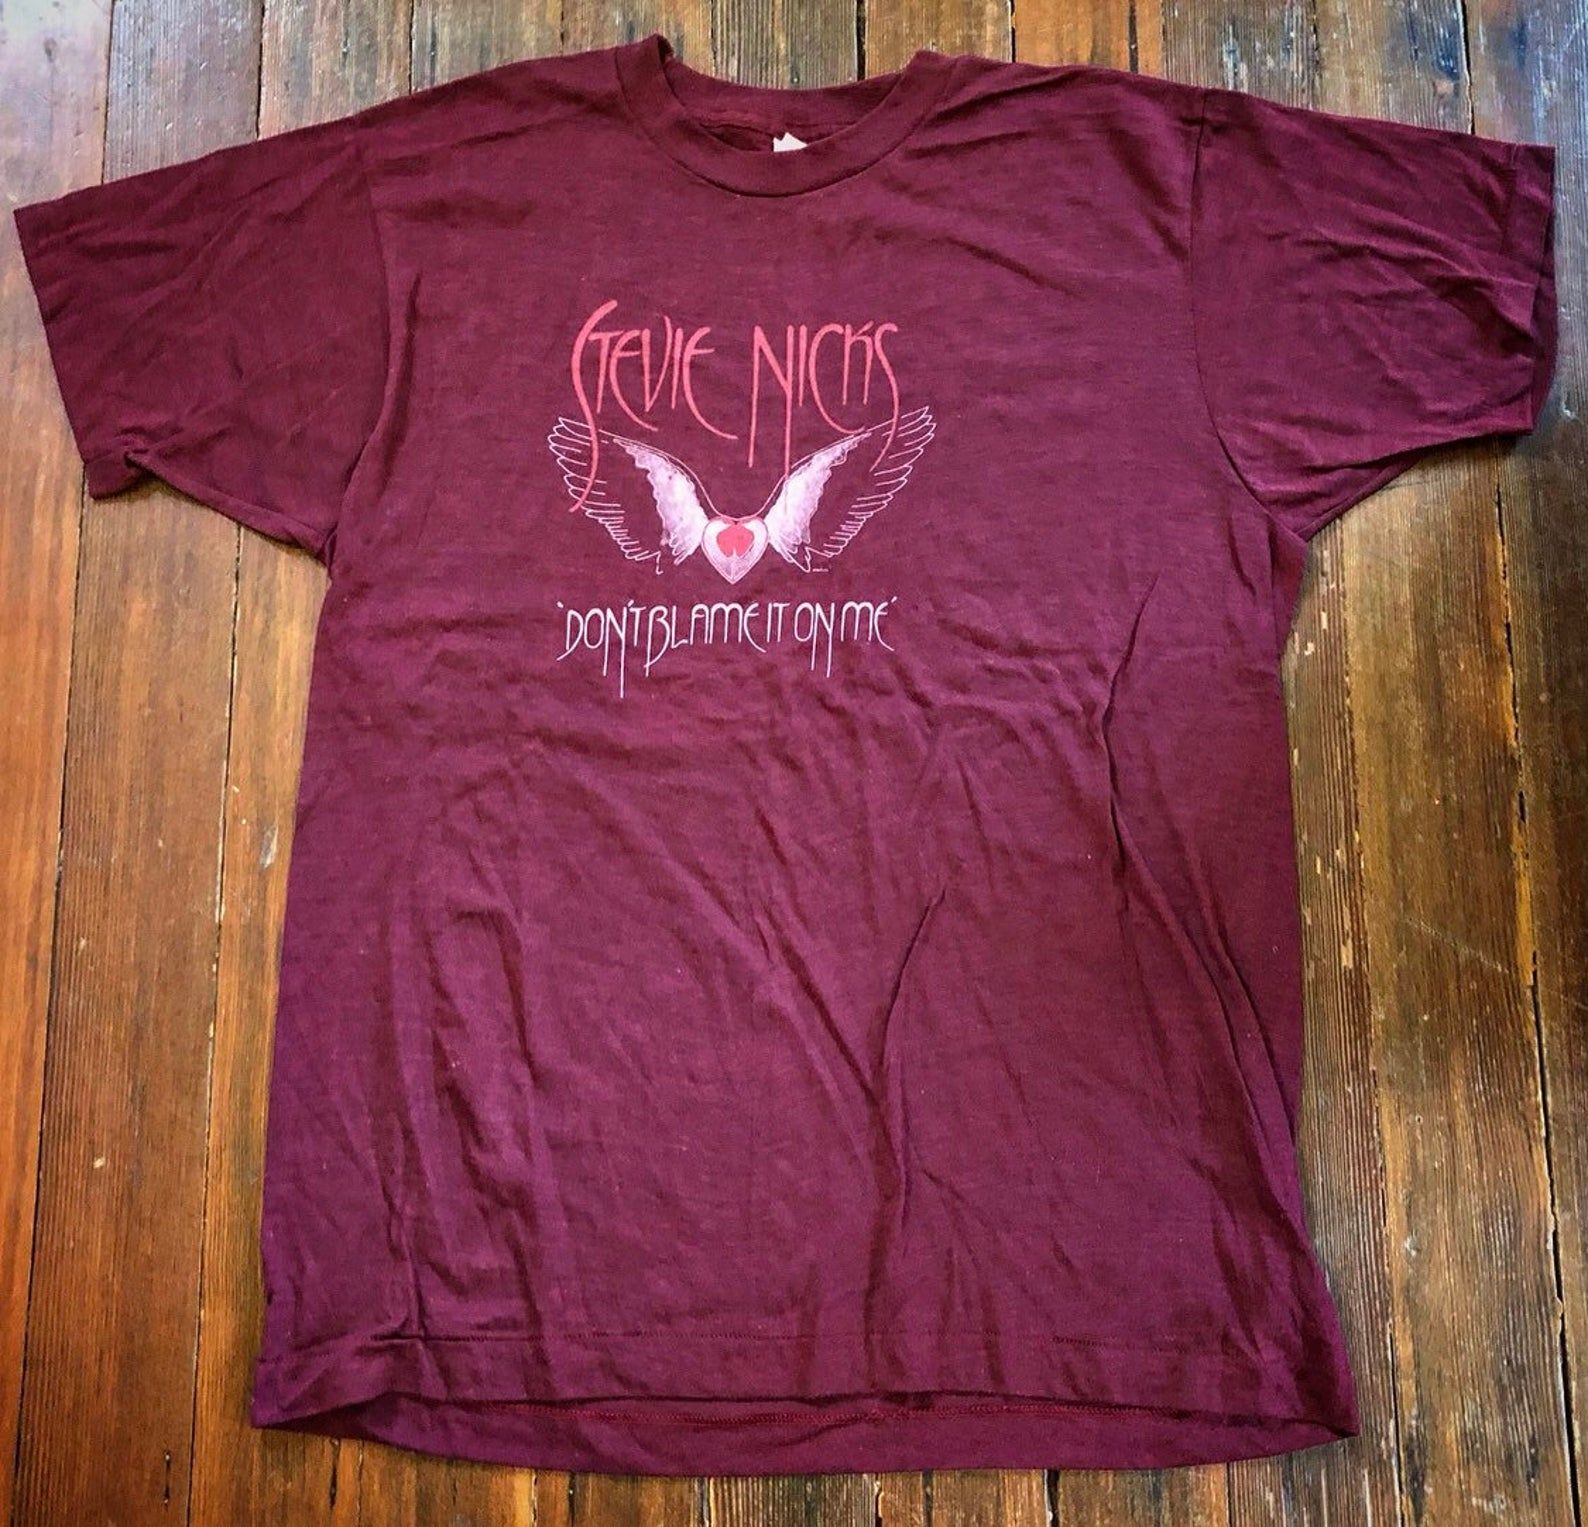 Vintage 1983 Stevie Nicks Blame Wild Heart Tour Concert Shirt Single Stitch Fleetwood Mac